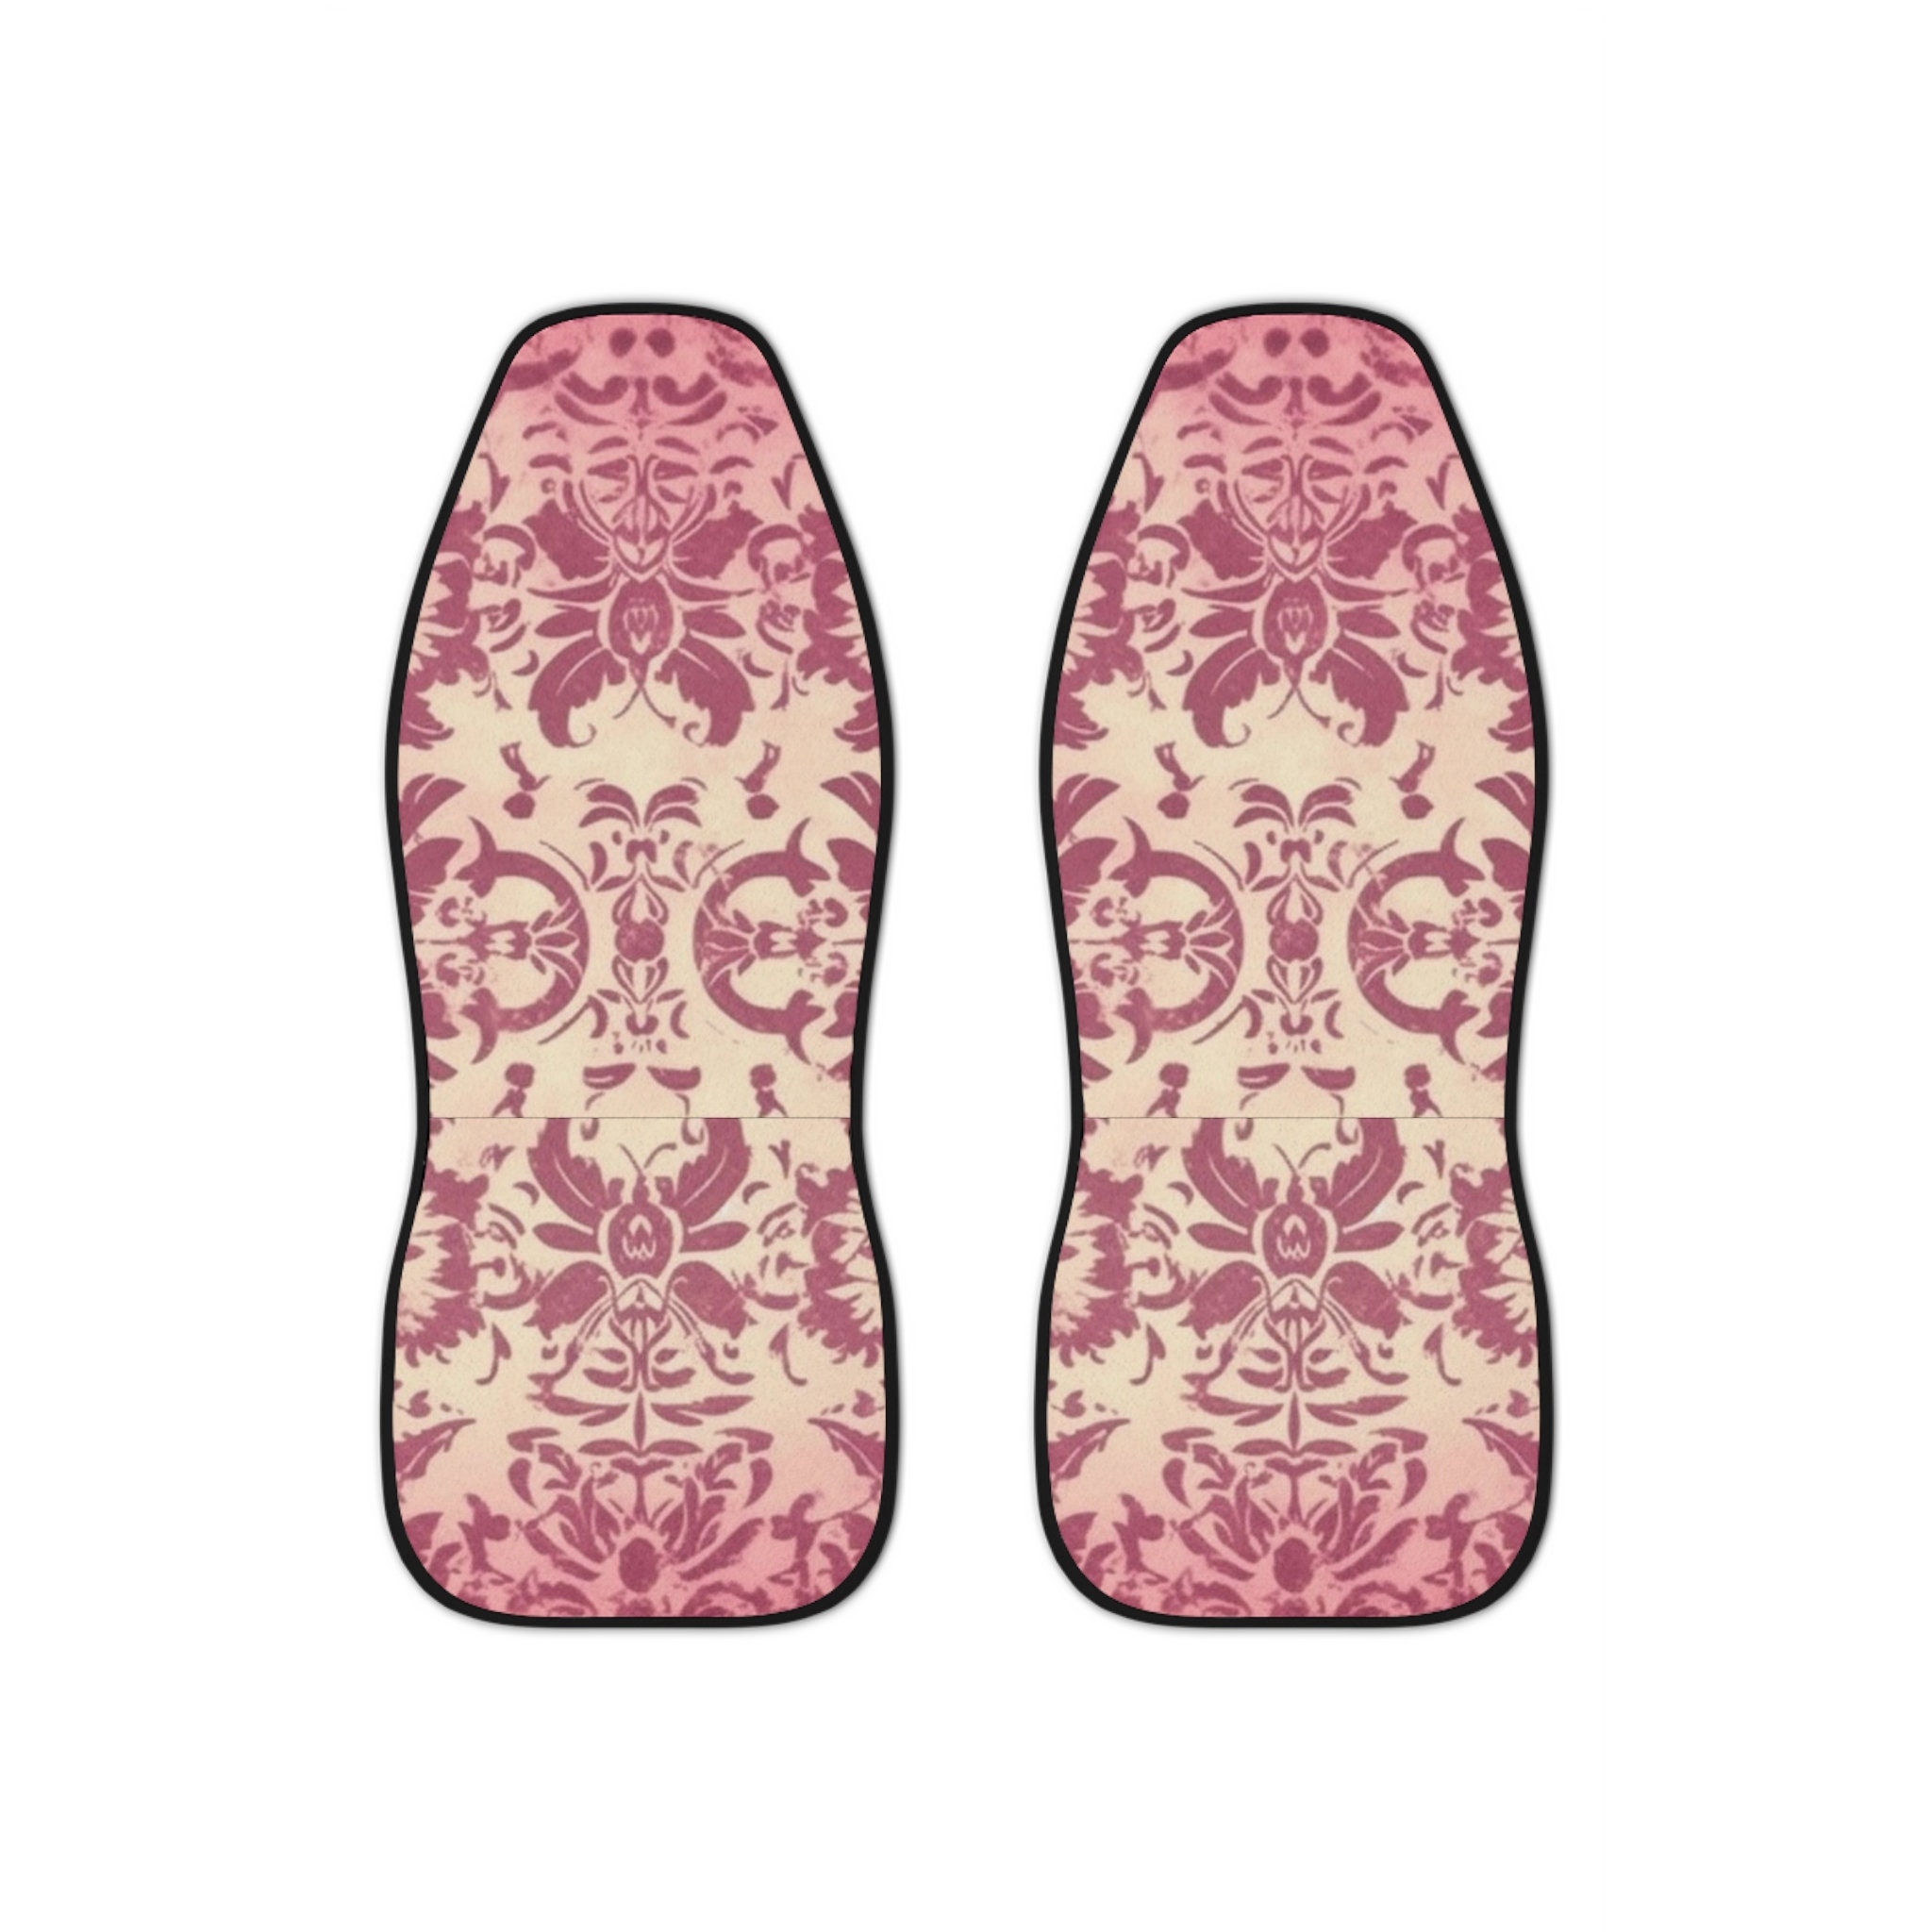 Car seat cover, Cute pink distressed pattern car seat pattern